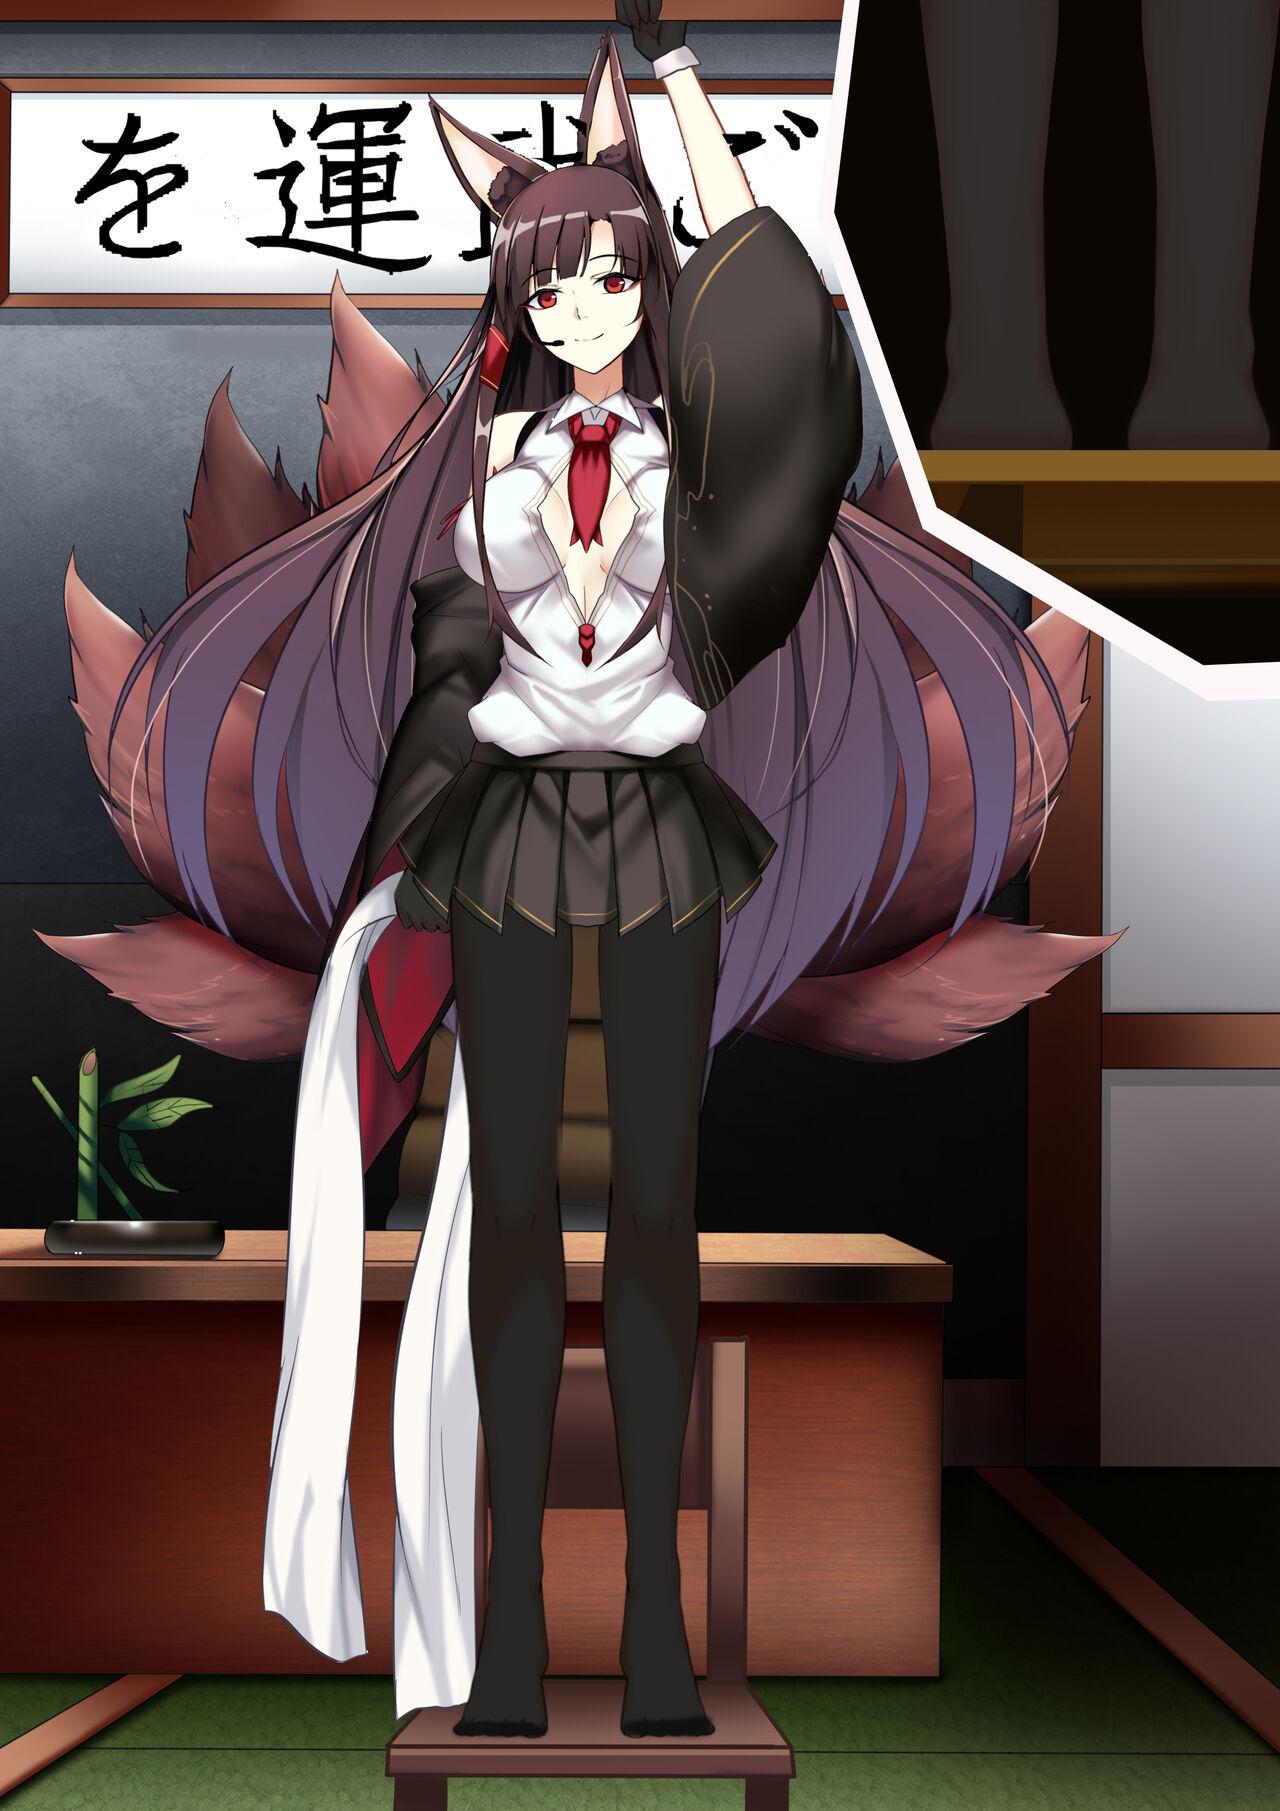 Akagi hanged herself in her office 25